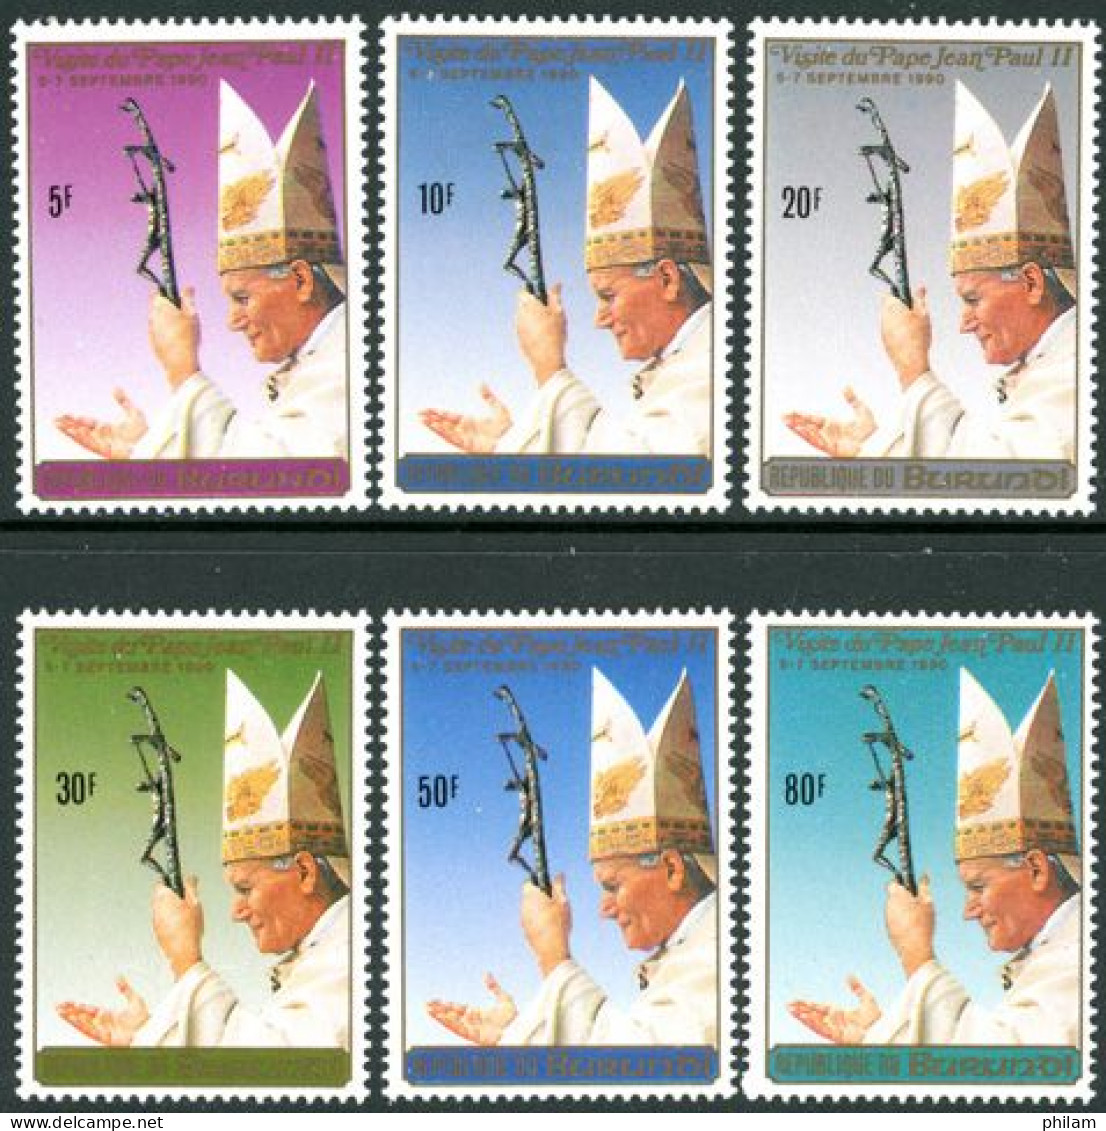 BURUNDI 1990 - Visite Du Pape Jean-Paul II - 6 V. - Papes